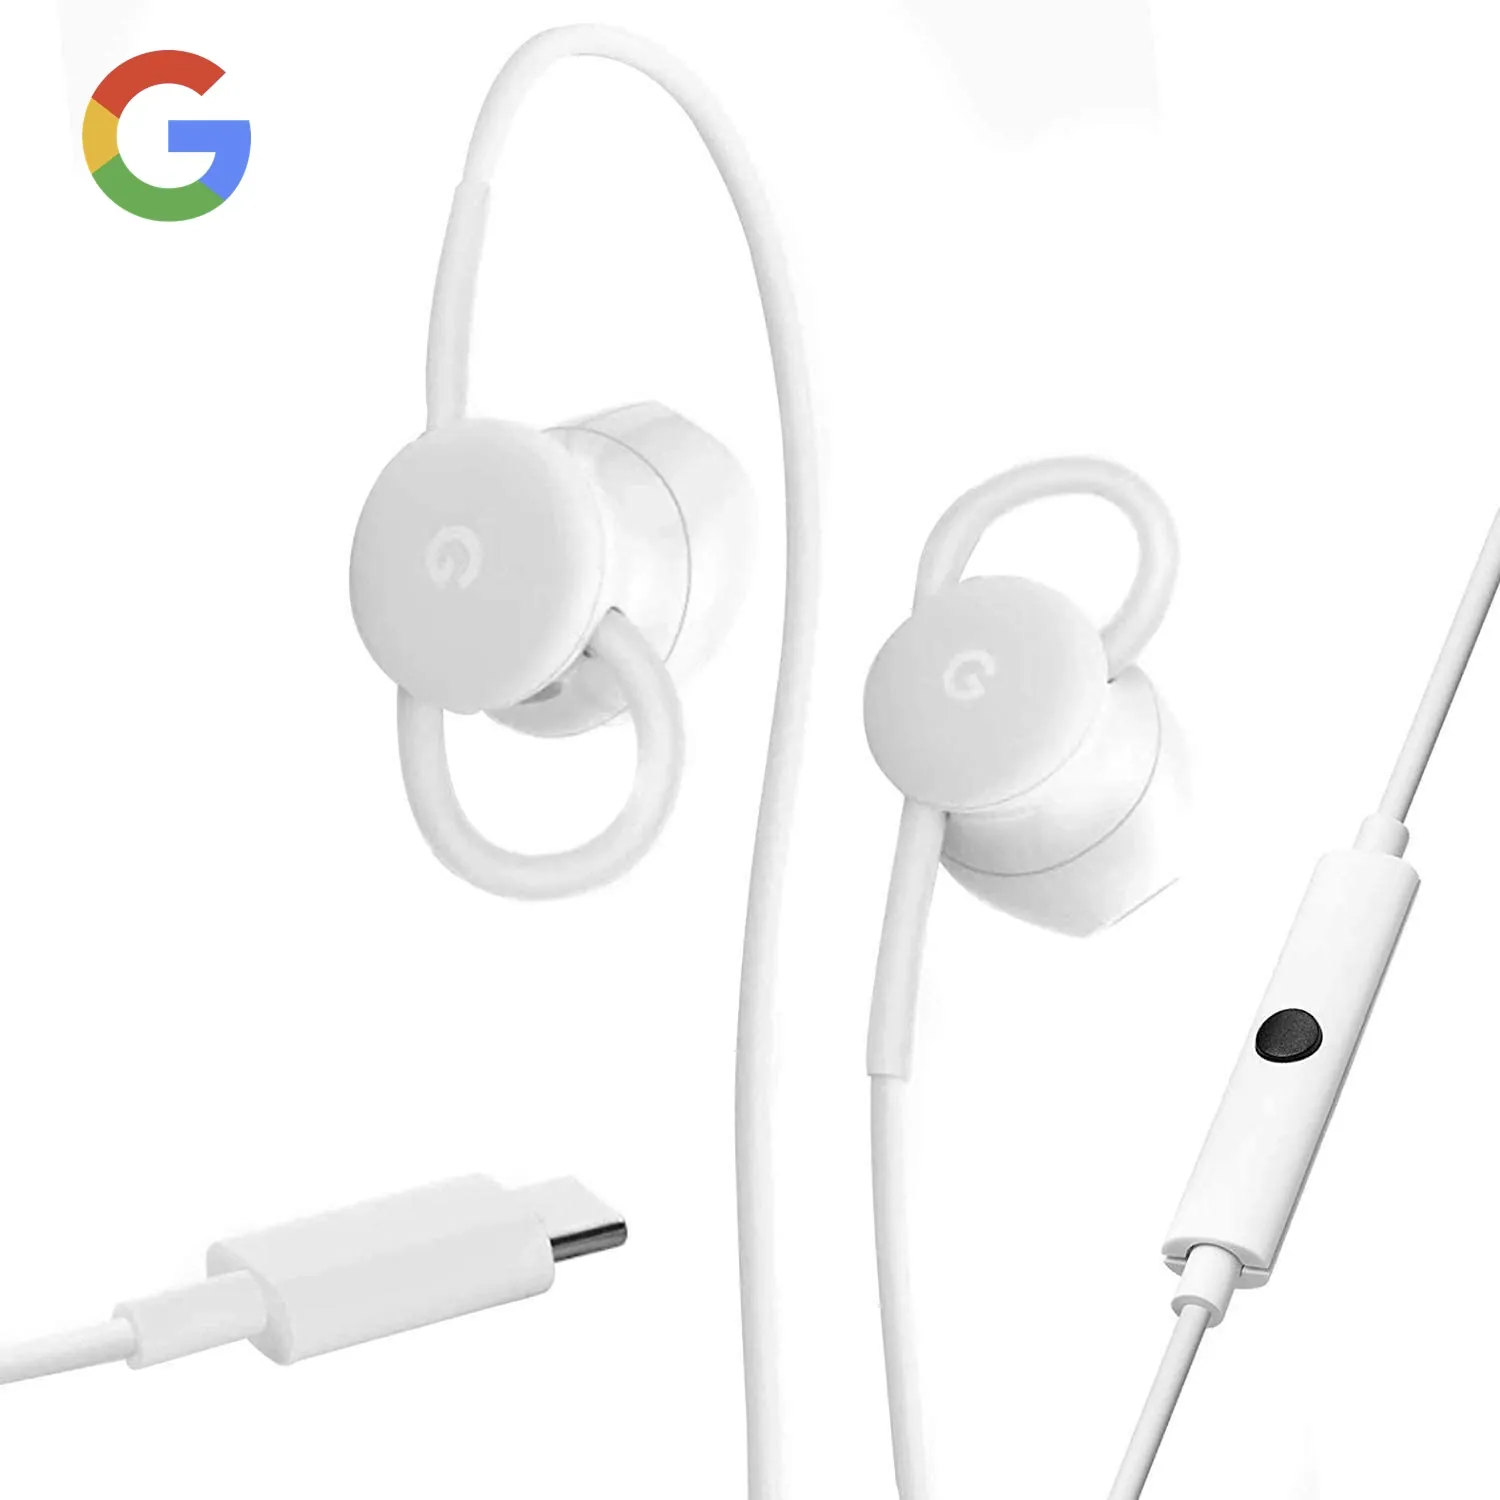 Google Pixel USB-C Headphone buysdalesbd